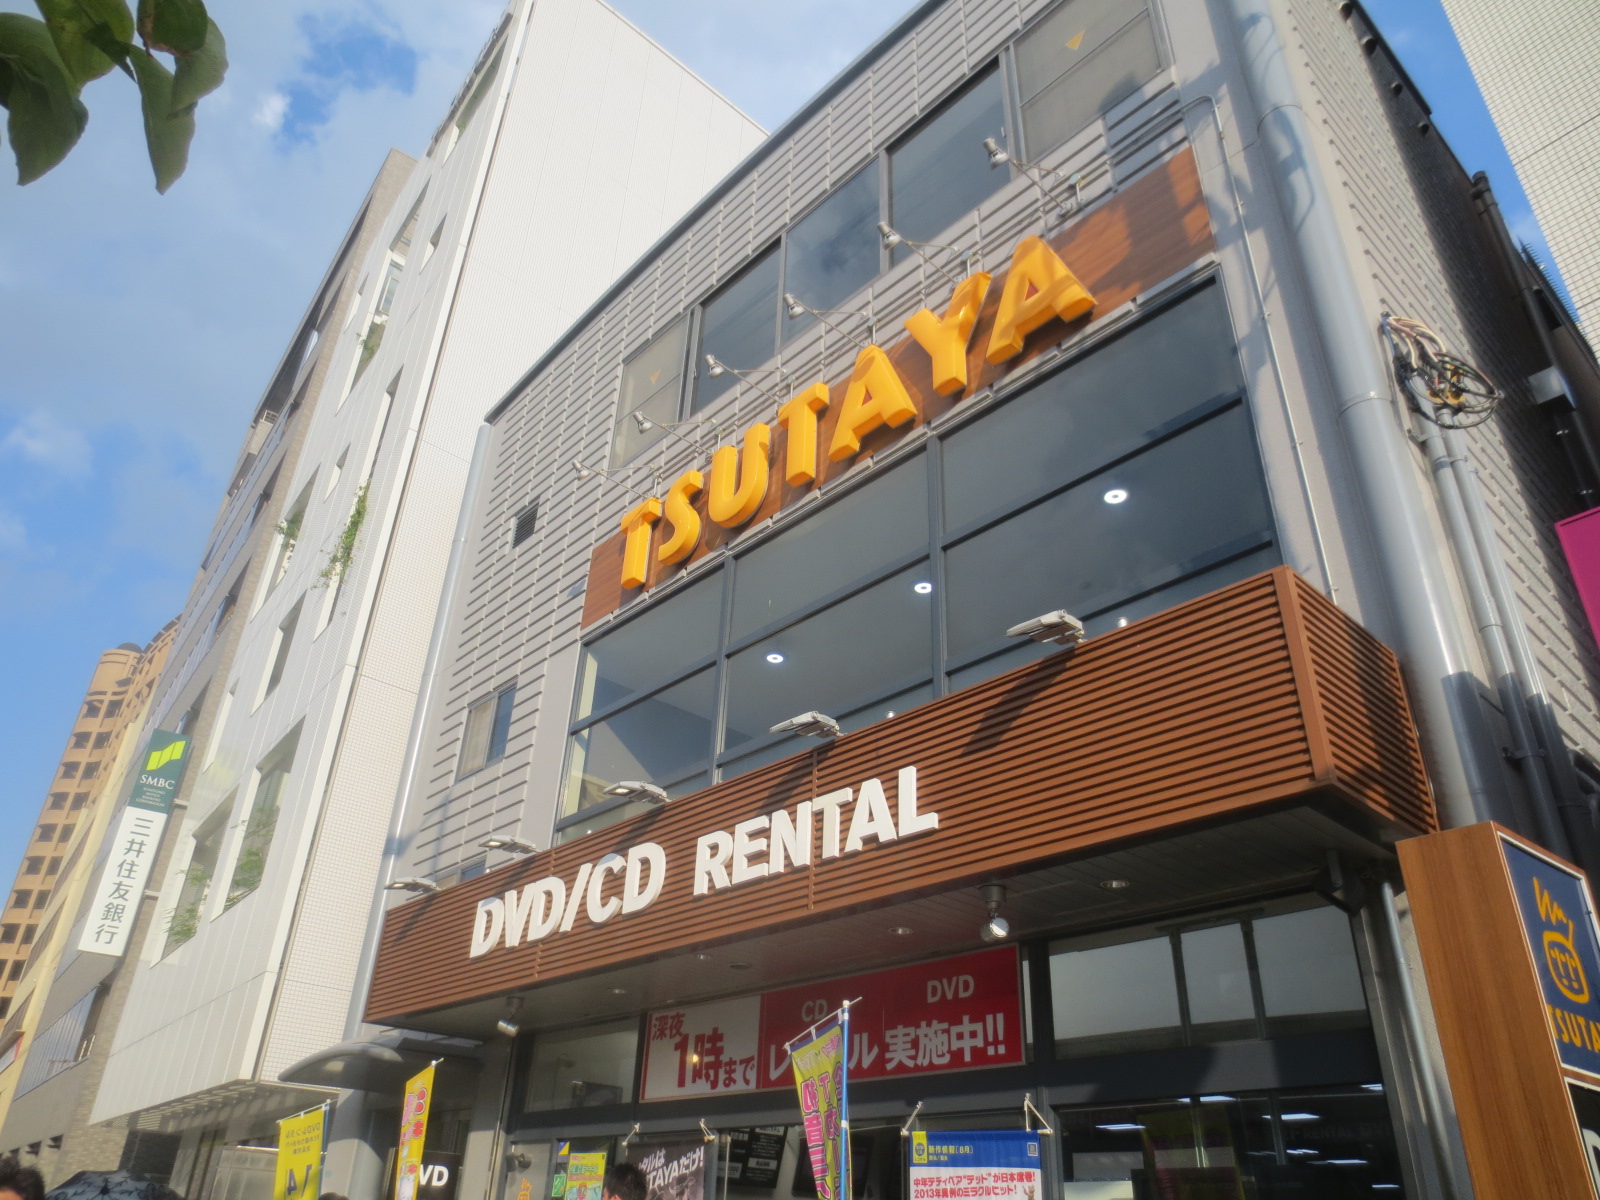 Rental video. TSUTAYA Okamoto shop 781m up (video rental)